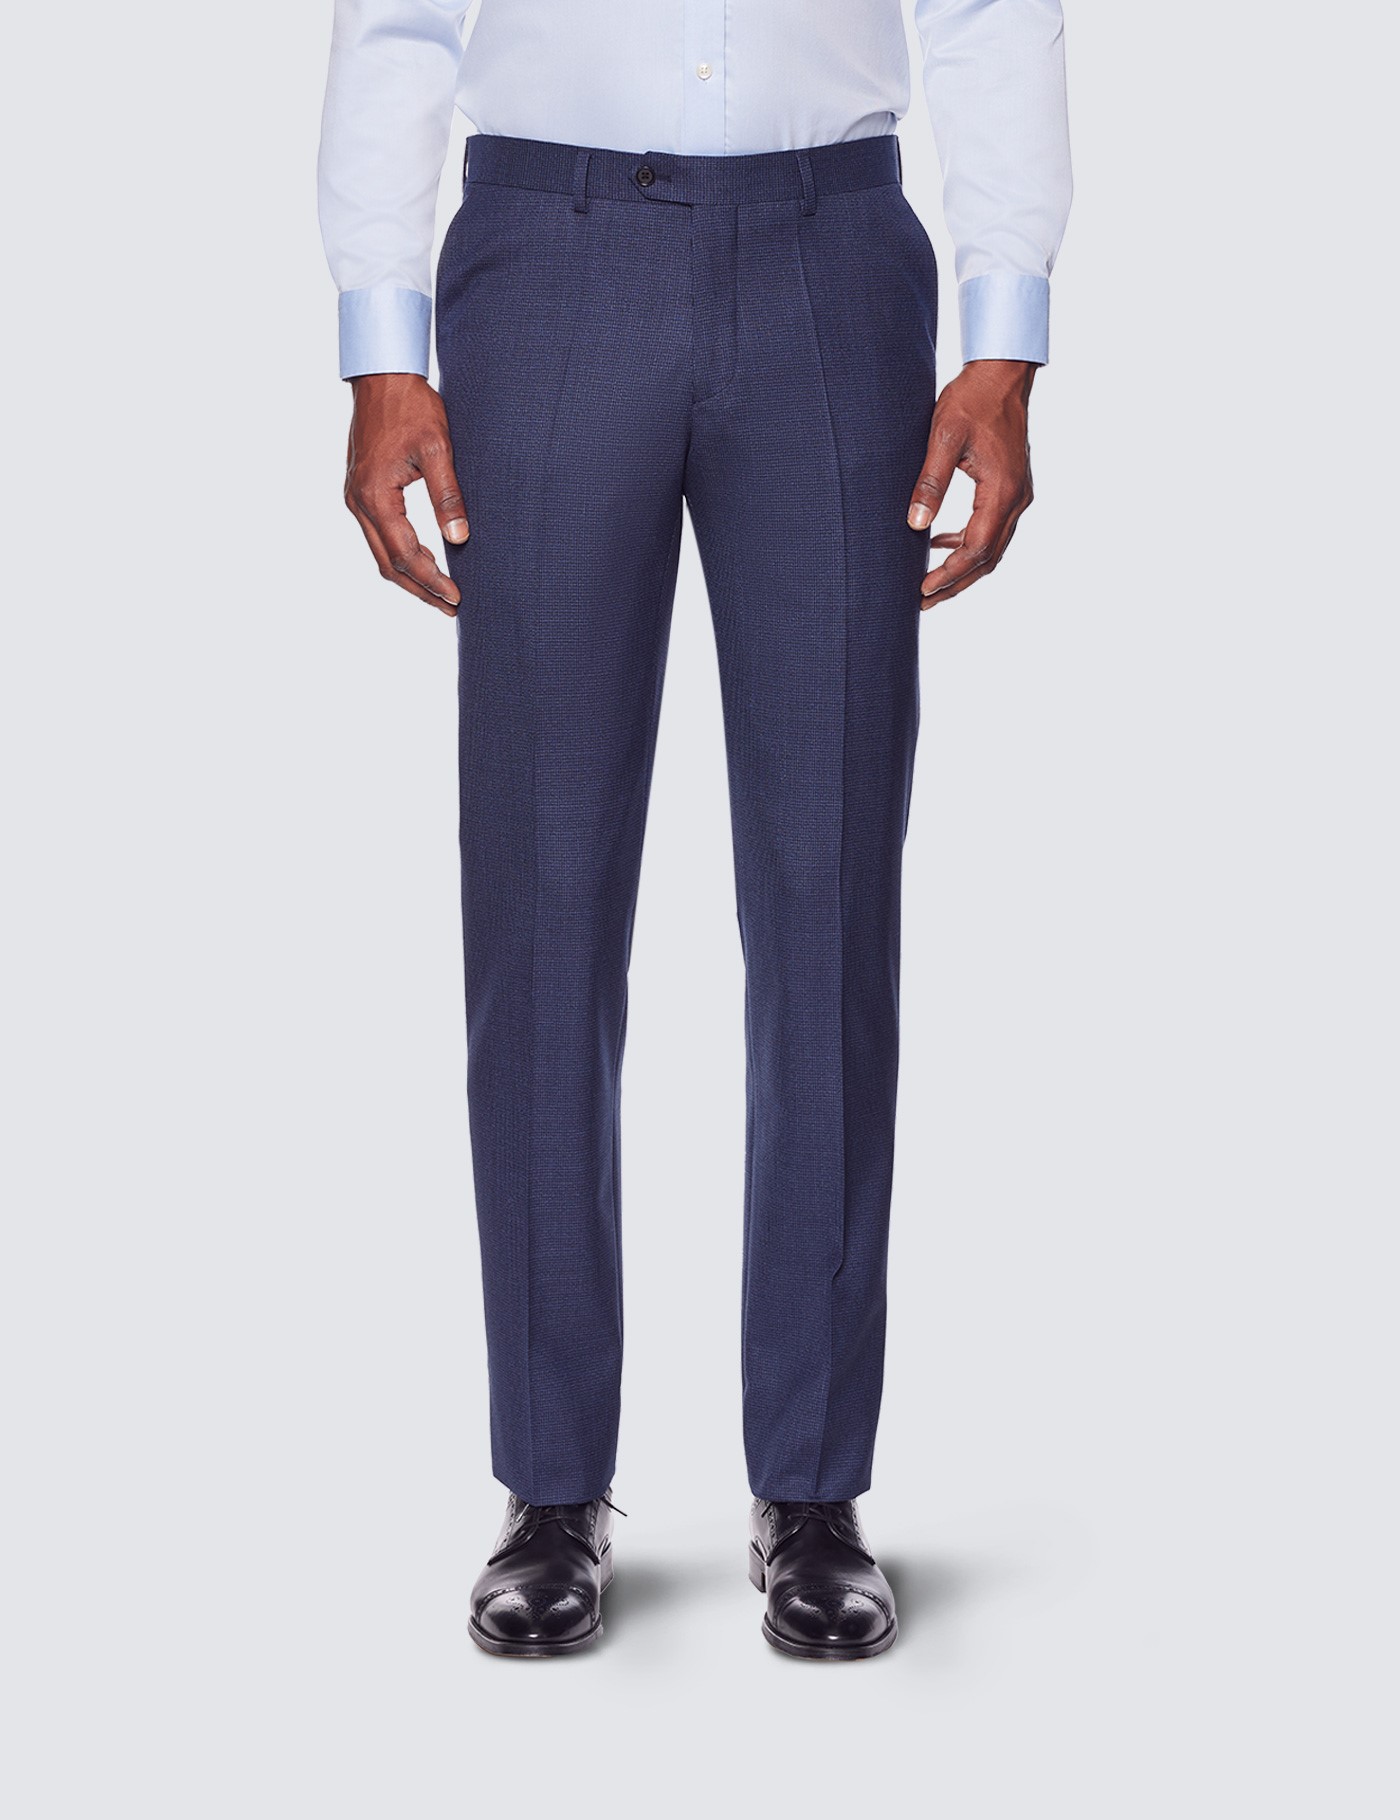 Trouser Pant Navy Blue Men's Formal Non Pleated Trouser - MT-106